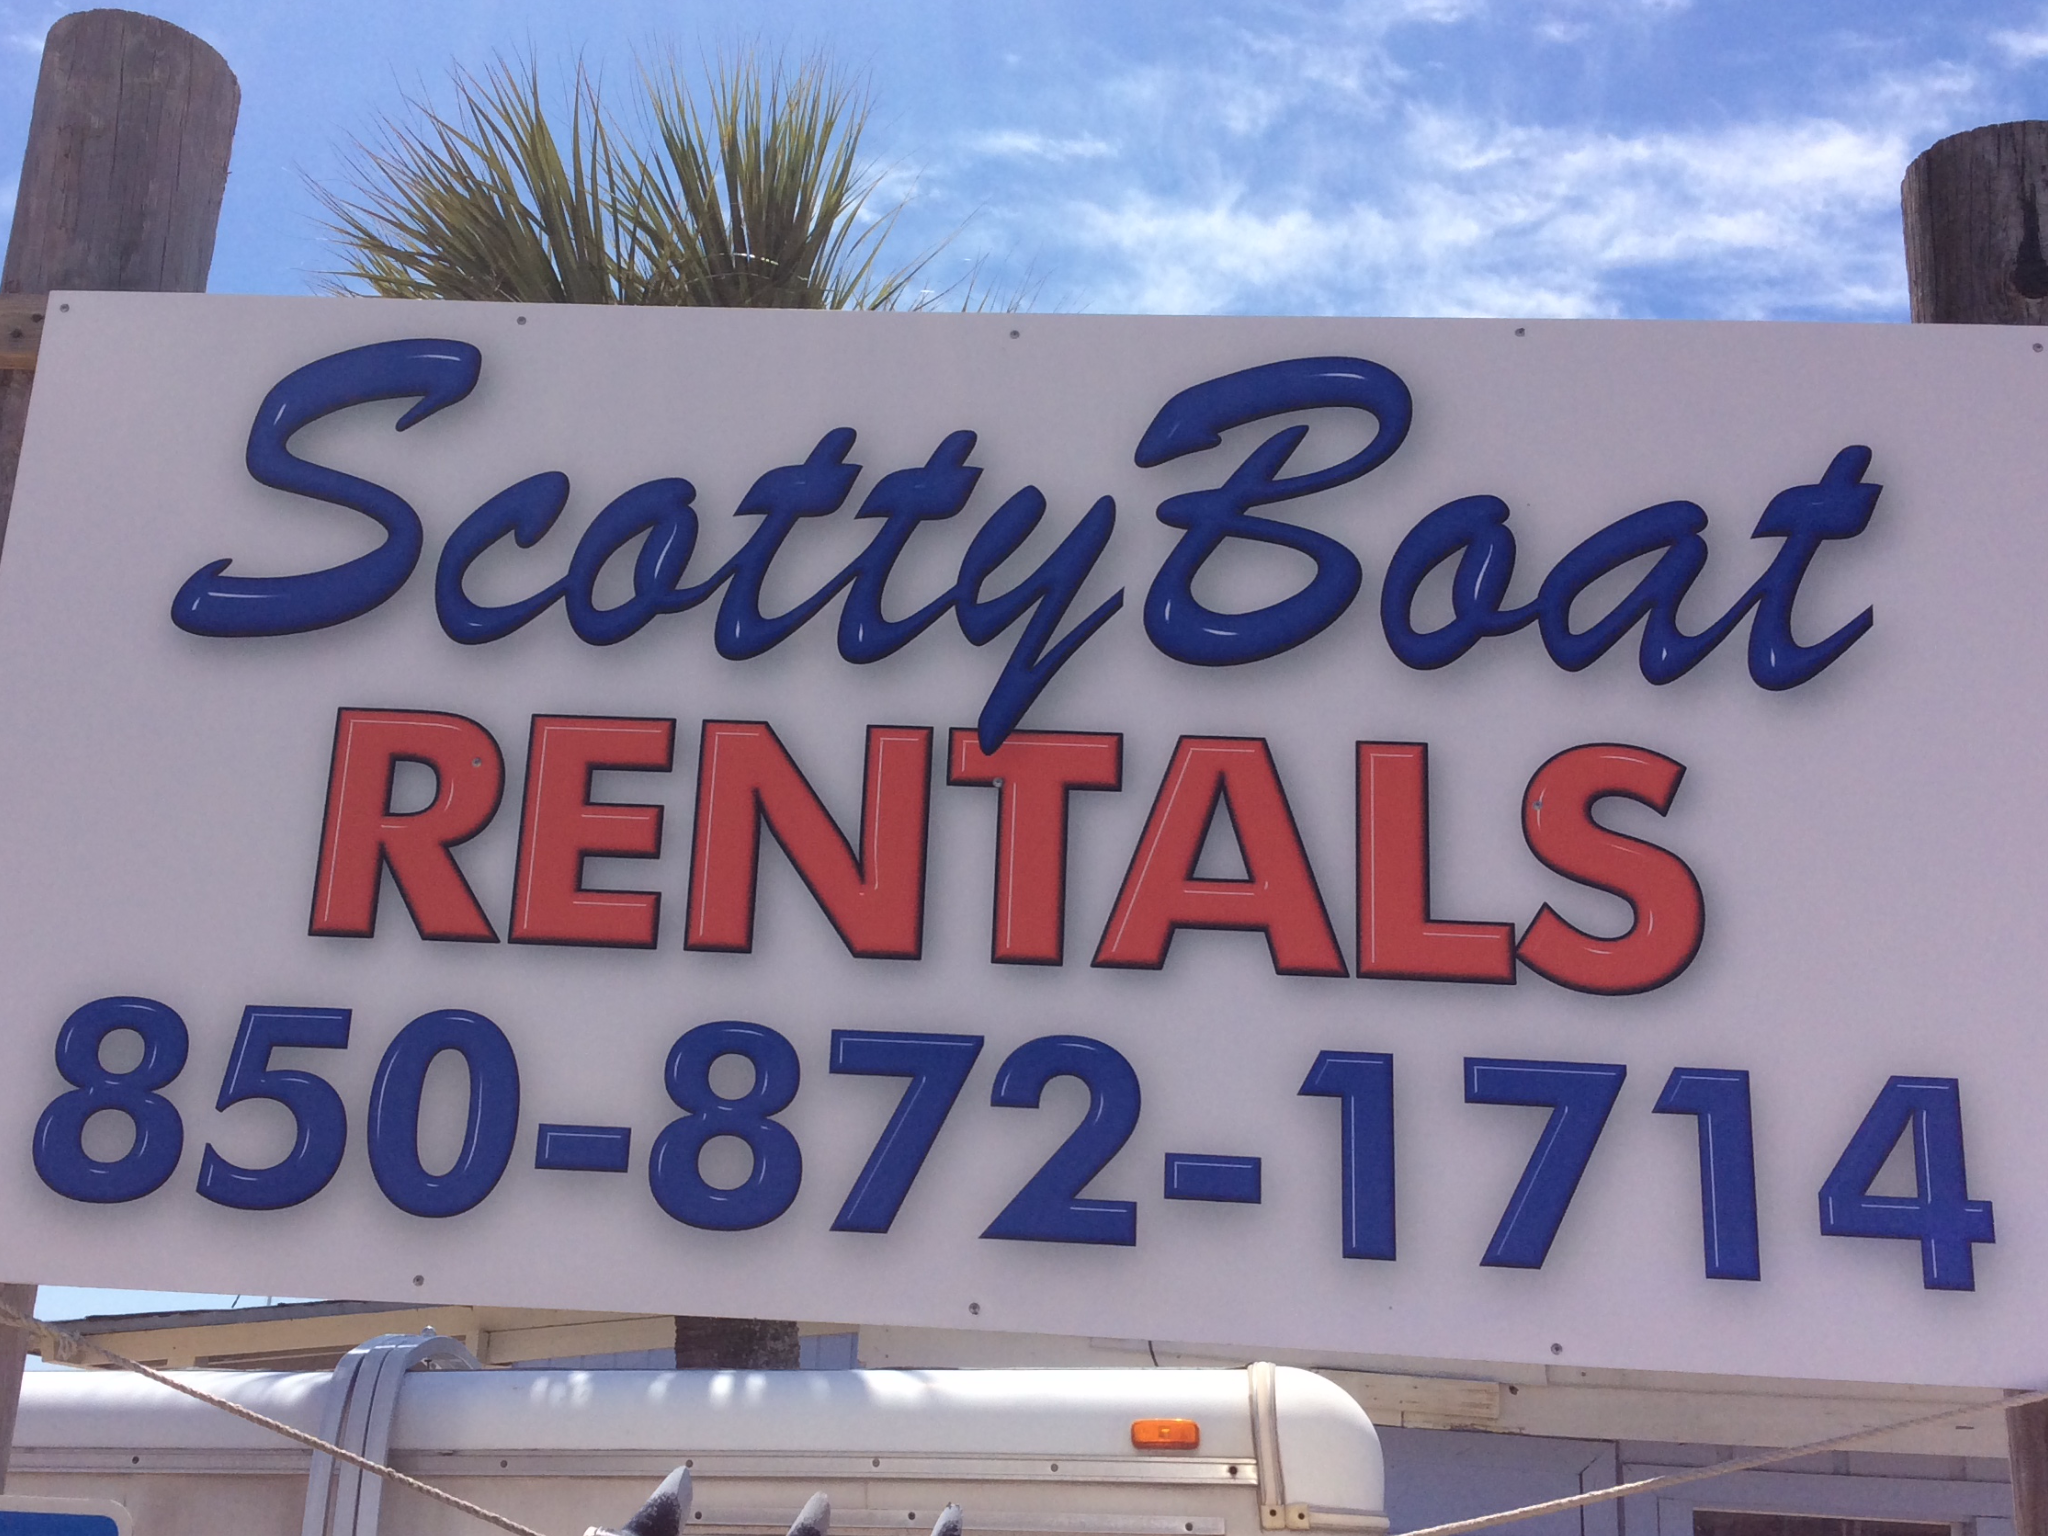 Scotty Boat Rentals 5611 W Highway 98 Panama City Fl 32401 Yp Com